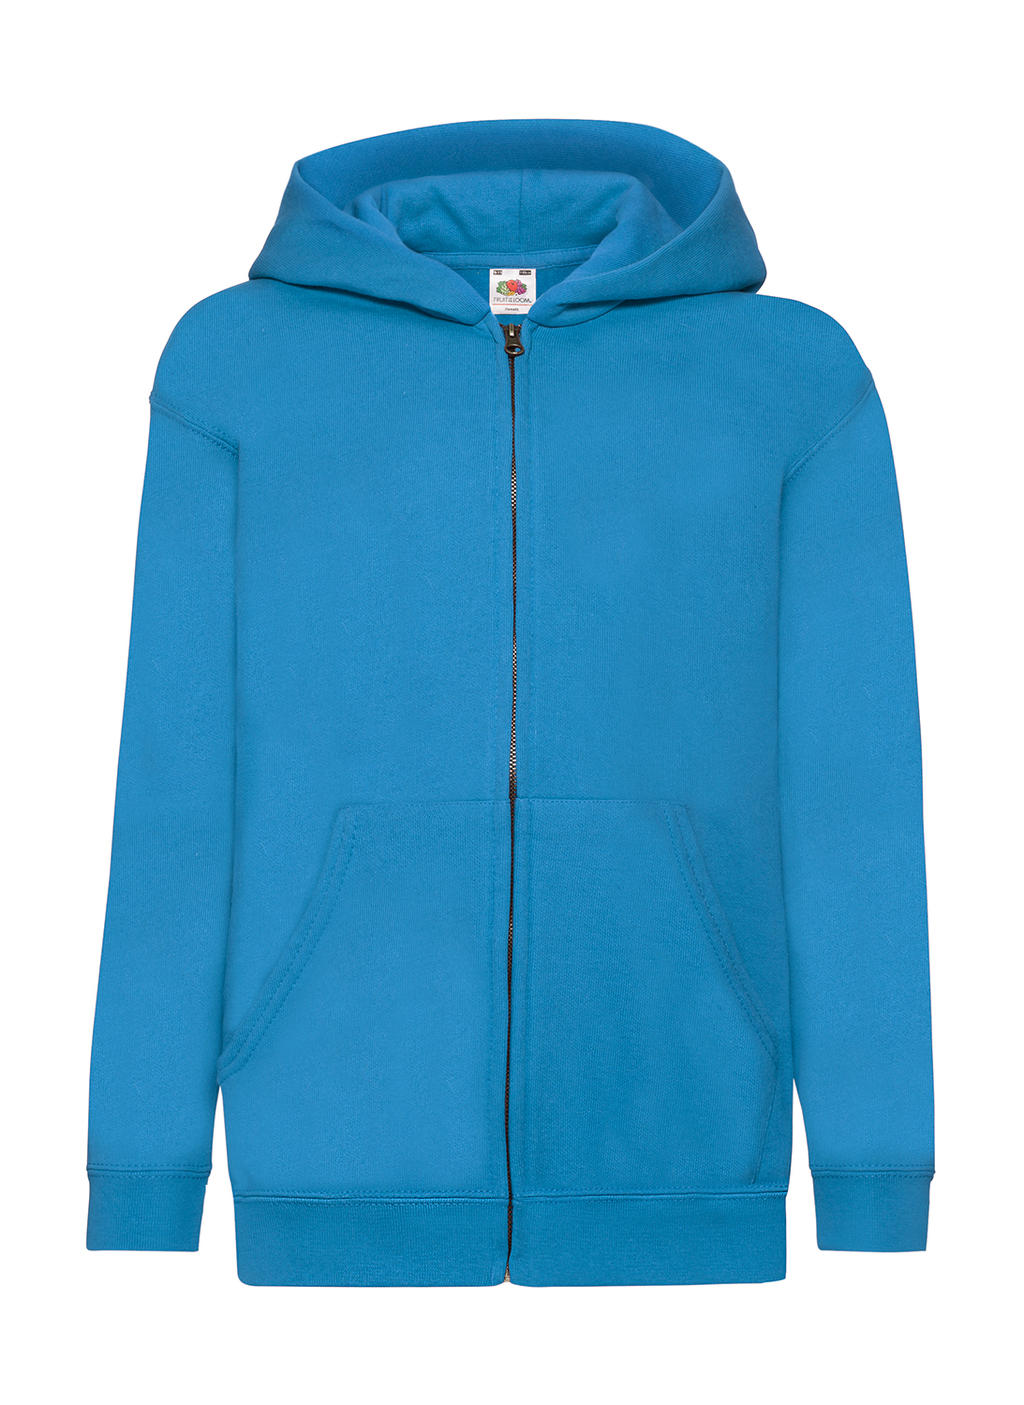  Kids Classic Hooded Sweat Jacket in Farbe Azure Blue